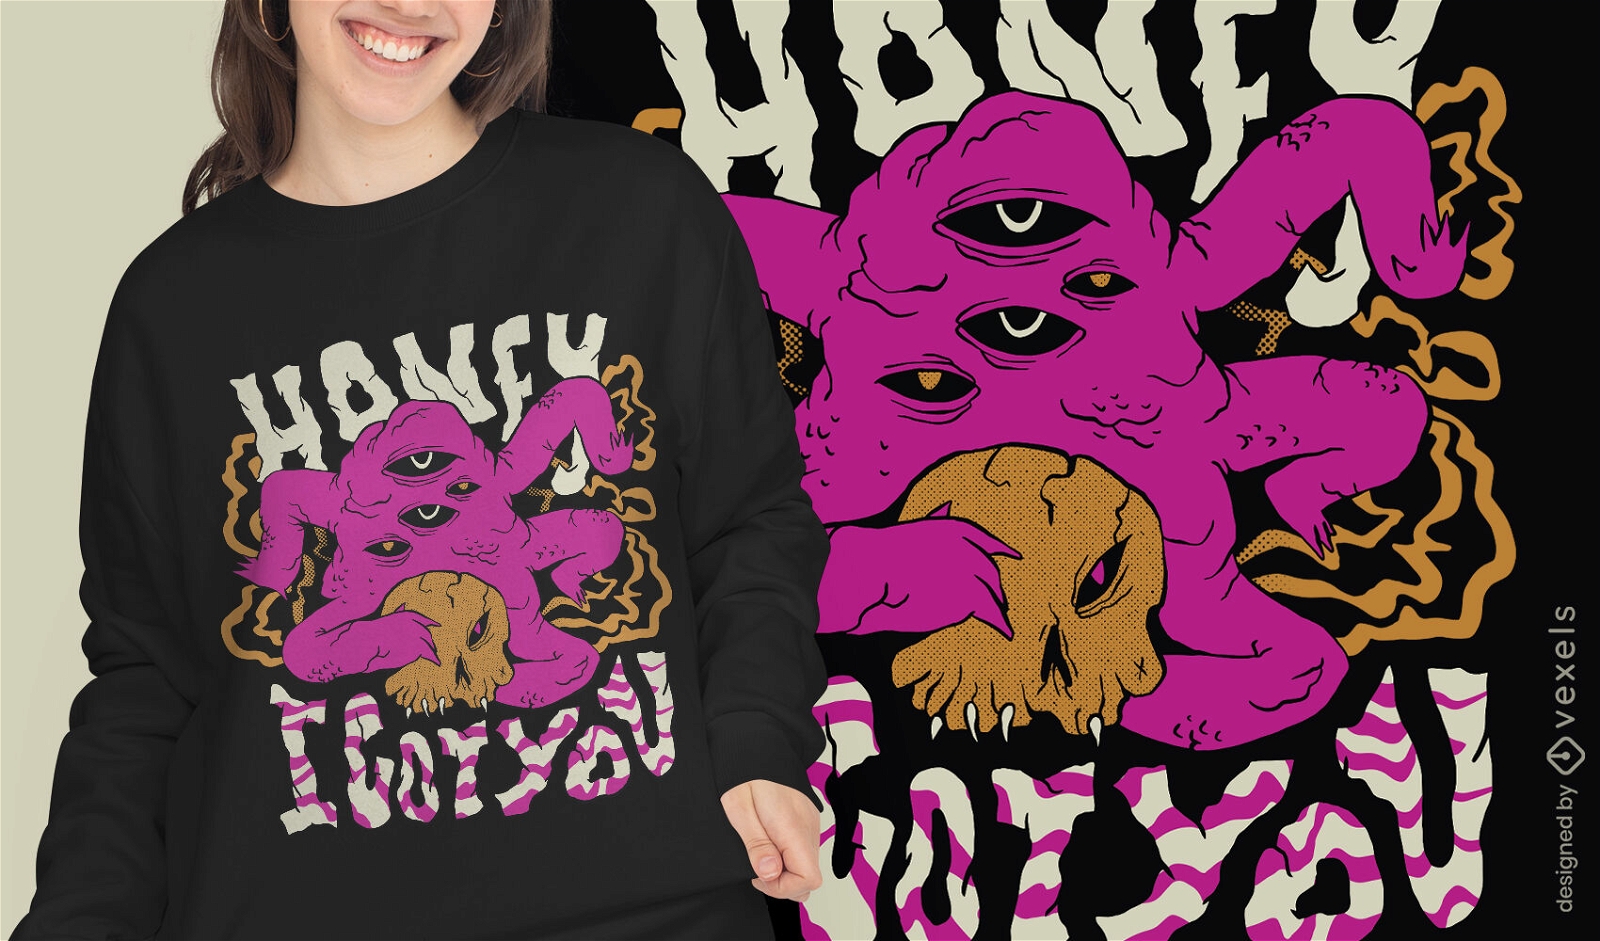 Trippy octopus creature t-shirt design